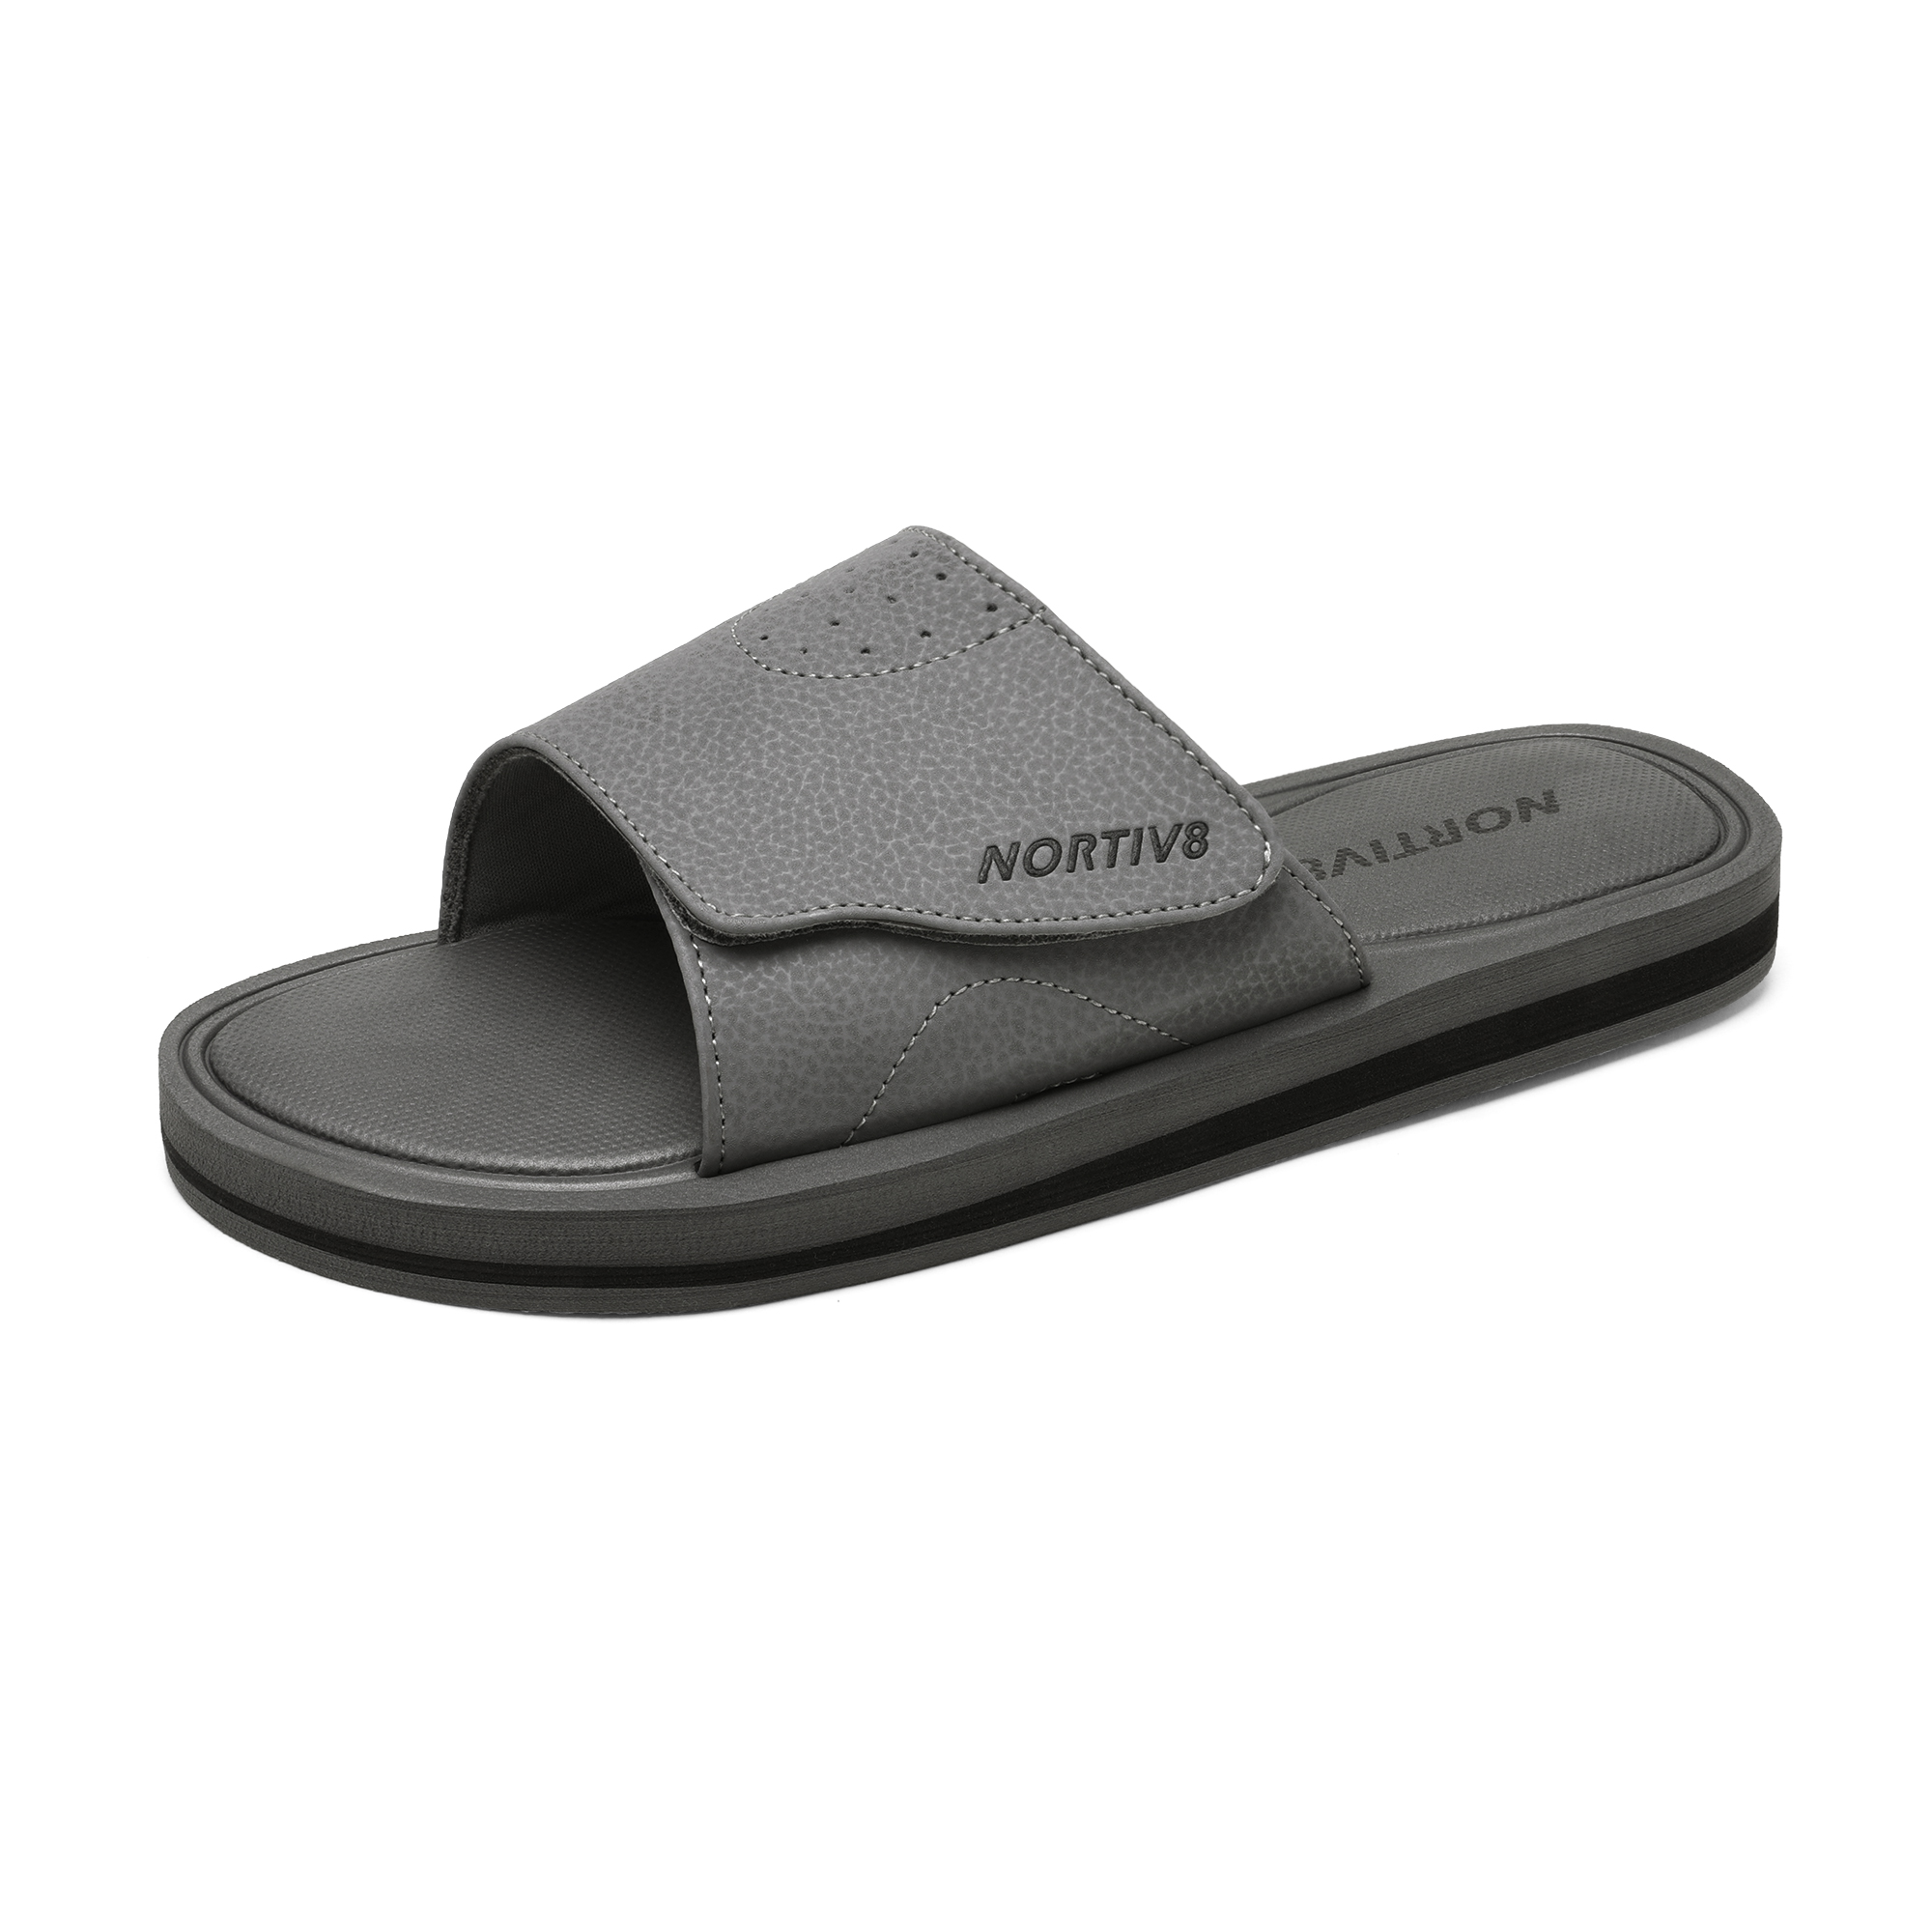 Nortiv8 Men's Memory Foam Adjustable Slide Sandals Comfort Lightweight Summer Beach Sandals Shoes FUSION GREY Size 9 - image 1 of 5